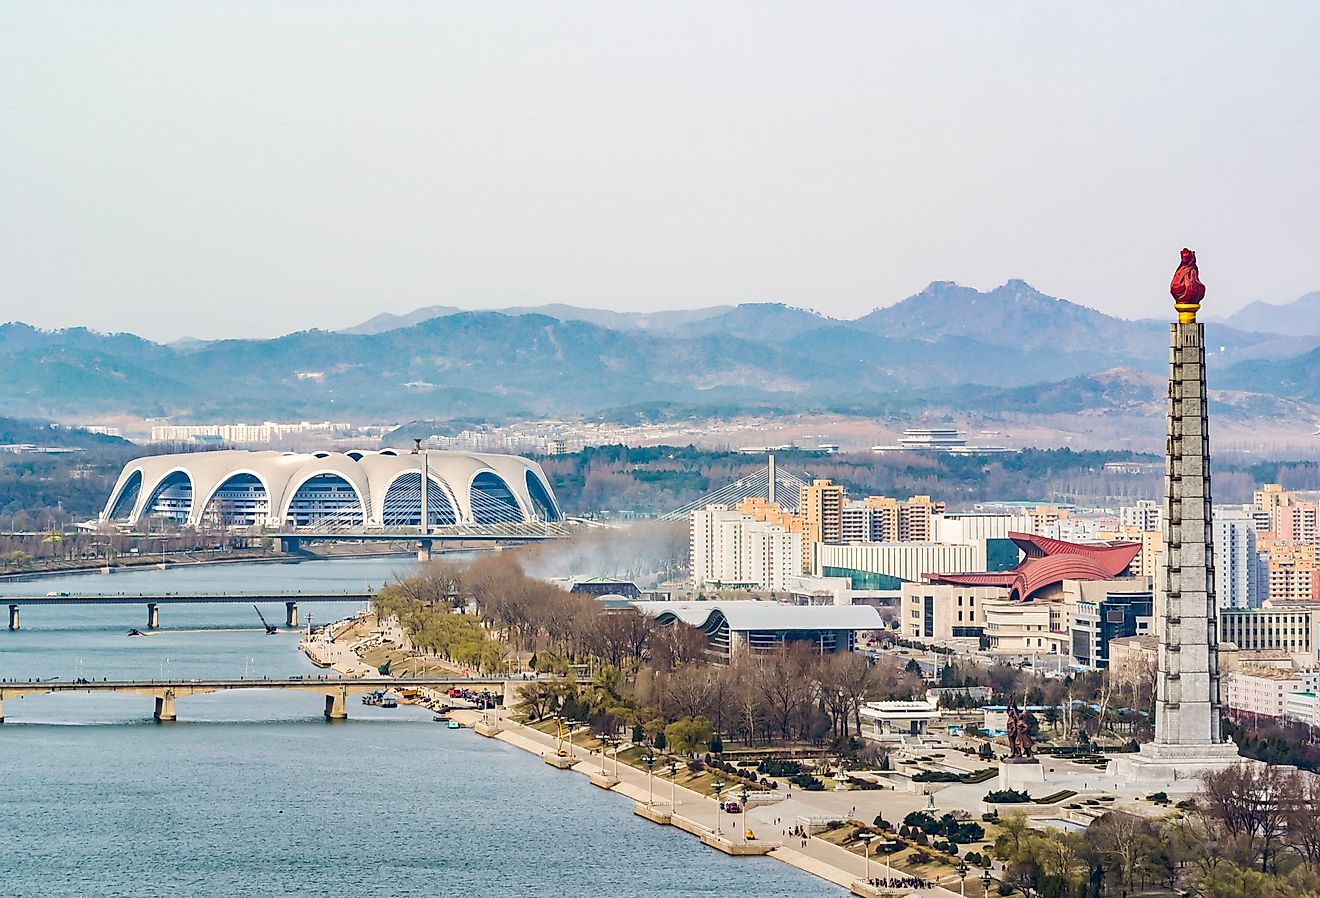 Pyongyang, North Korean capital skyline with Rungrado 1st of May Stadium. Image credit Herr Loeffler via Shutterstock